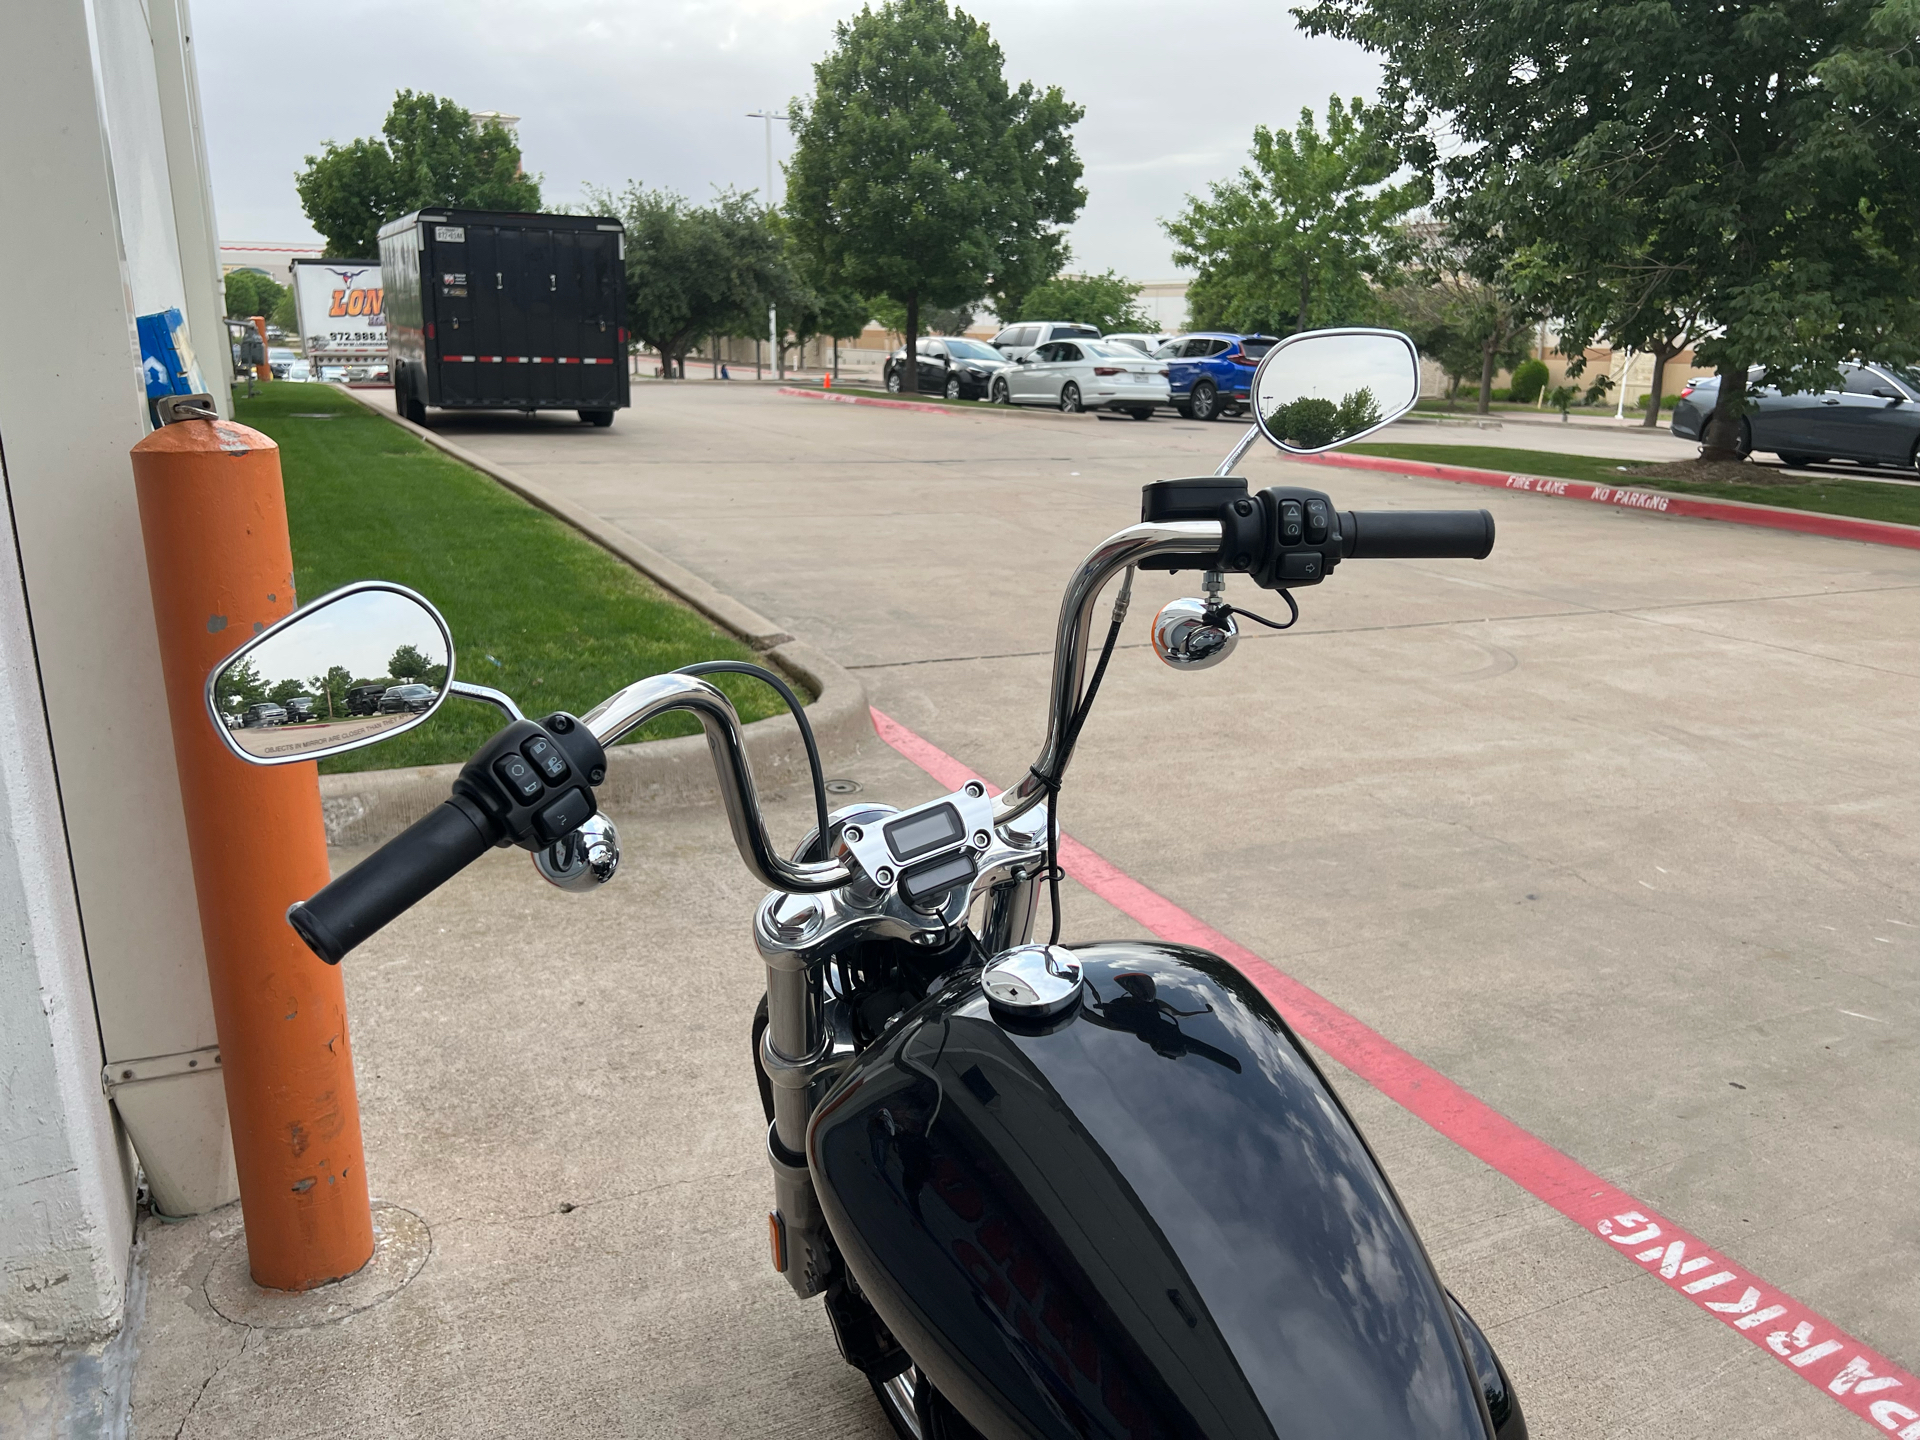 2021 Harley-Davidson Softail® Standard in Grand Prairie, Texas - Photo 7